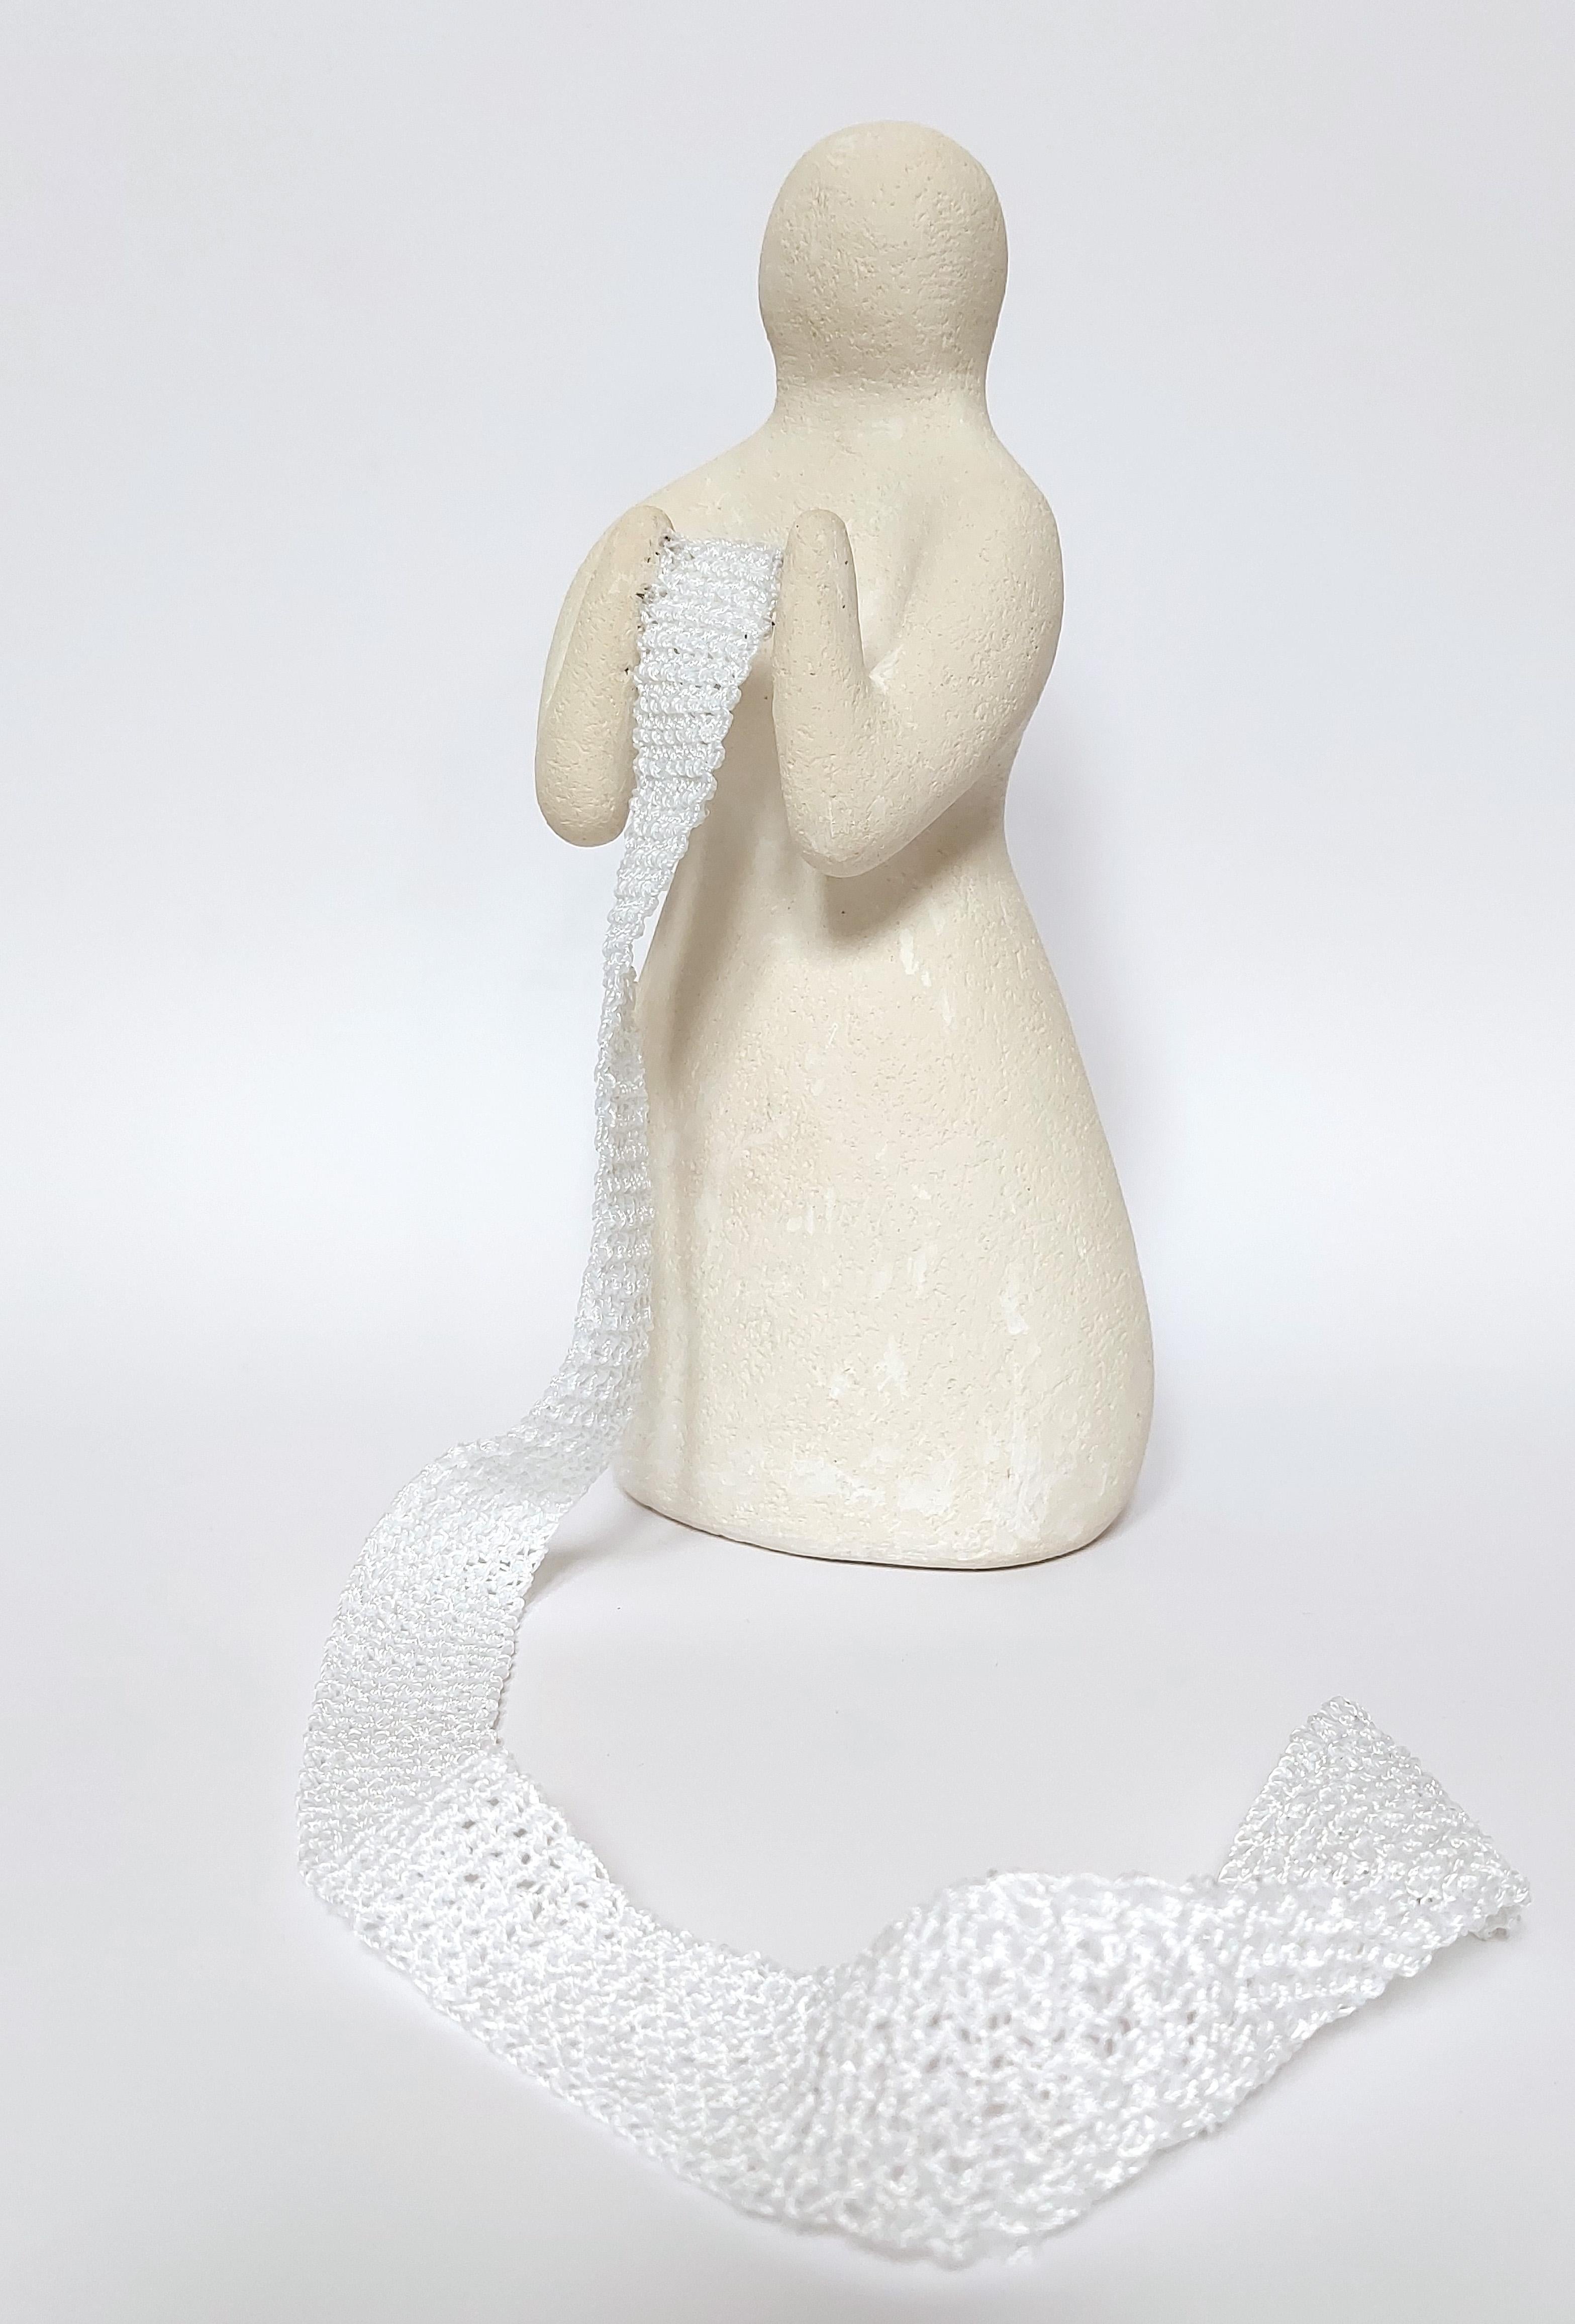 ceramic figure sculpture